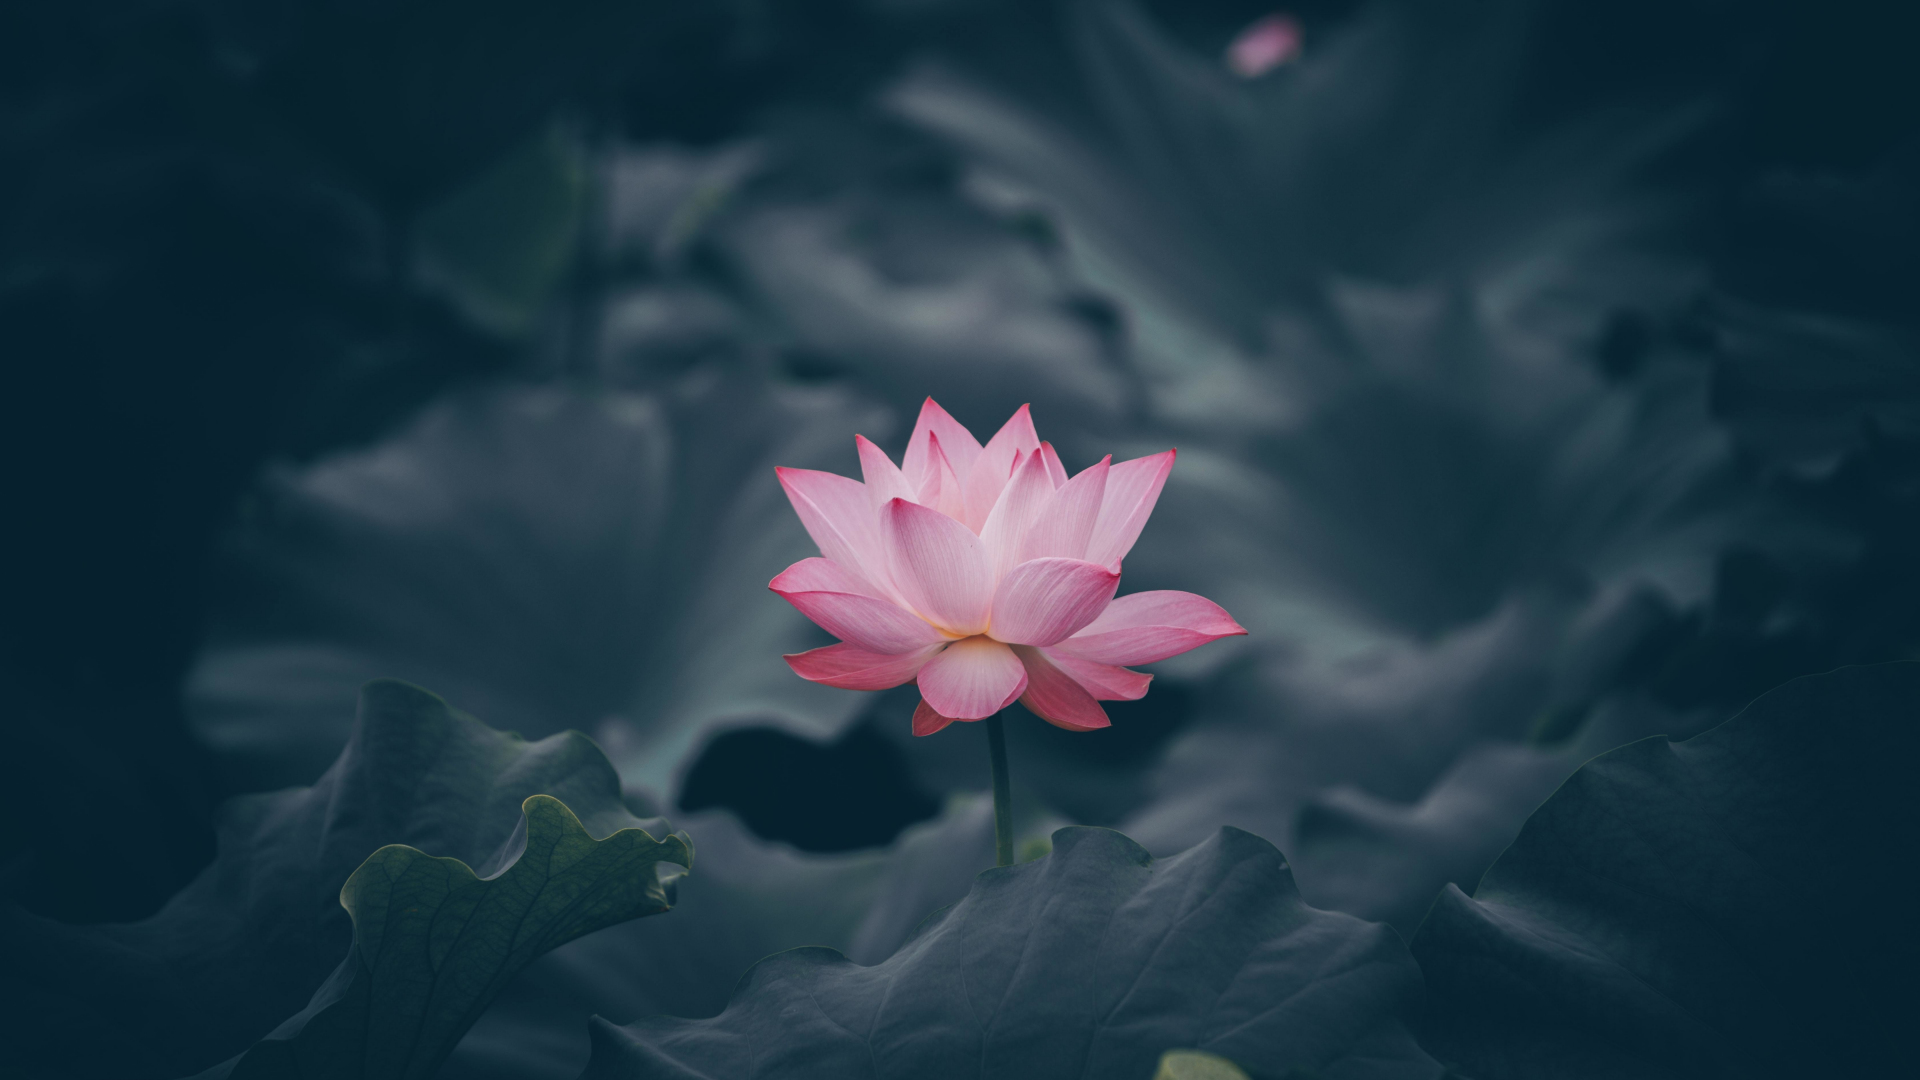 Download wallpaper 1920x1080 pink lotus, flower, bloom, full hd, hdtv, fhd, 1080p  wallpaper, 1920x1080 hd background, 25554